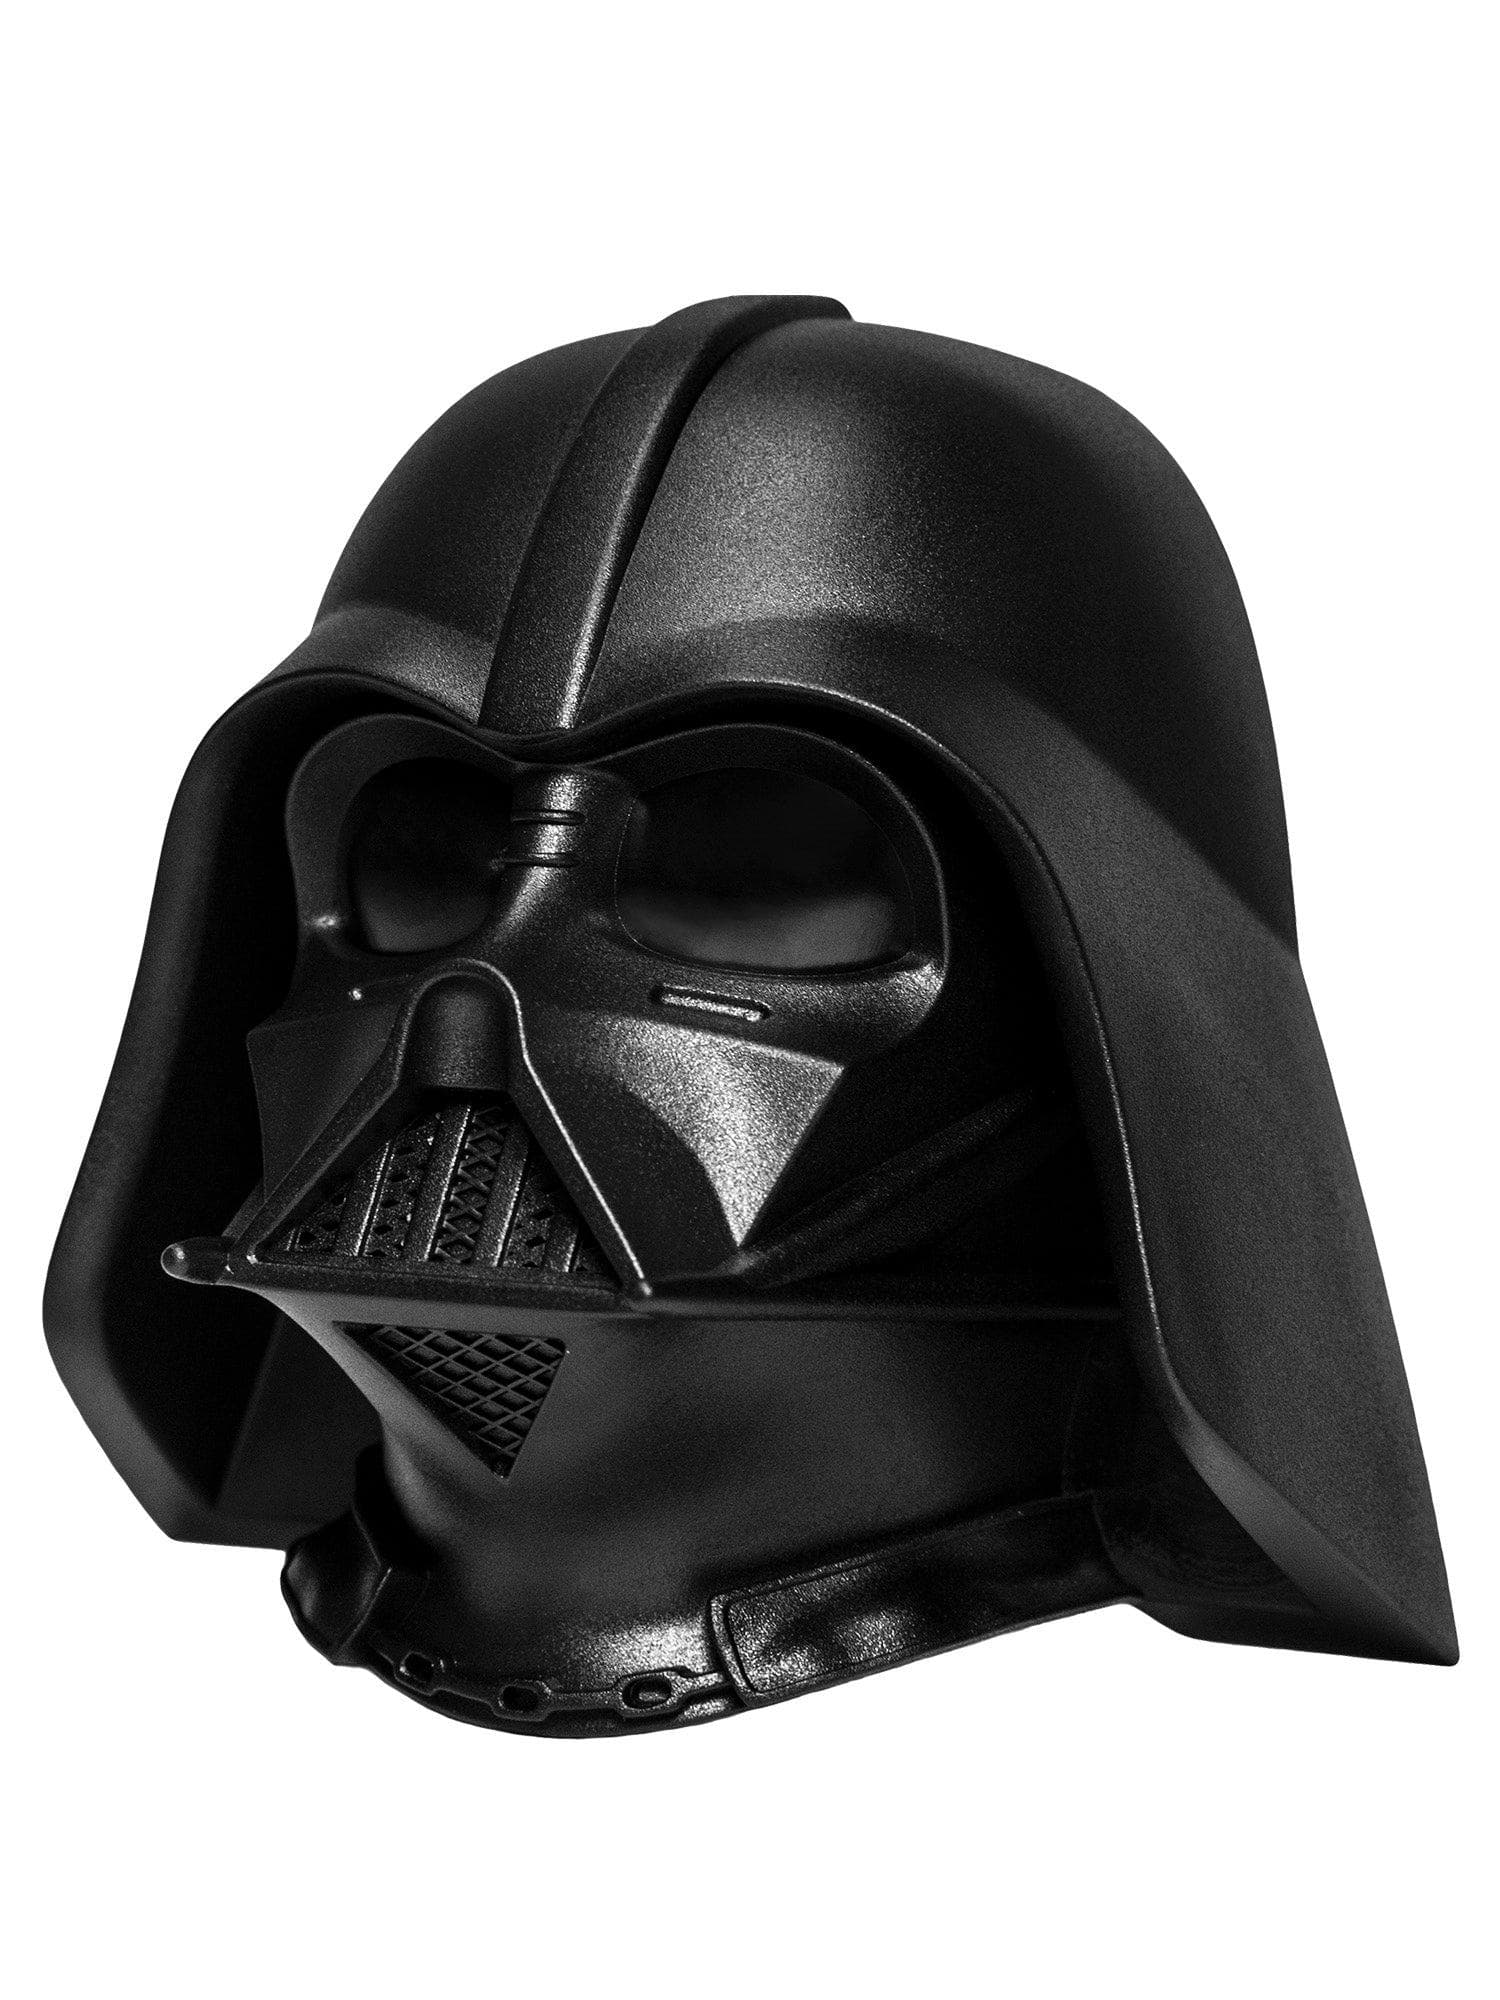 Star Wars Darth Vader Talking Clapper - costumes.com